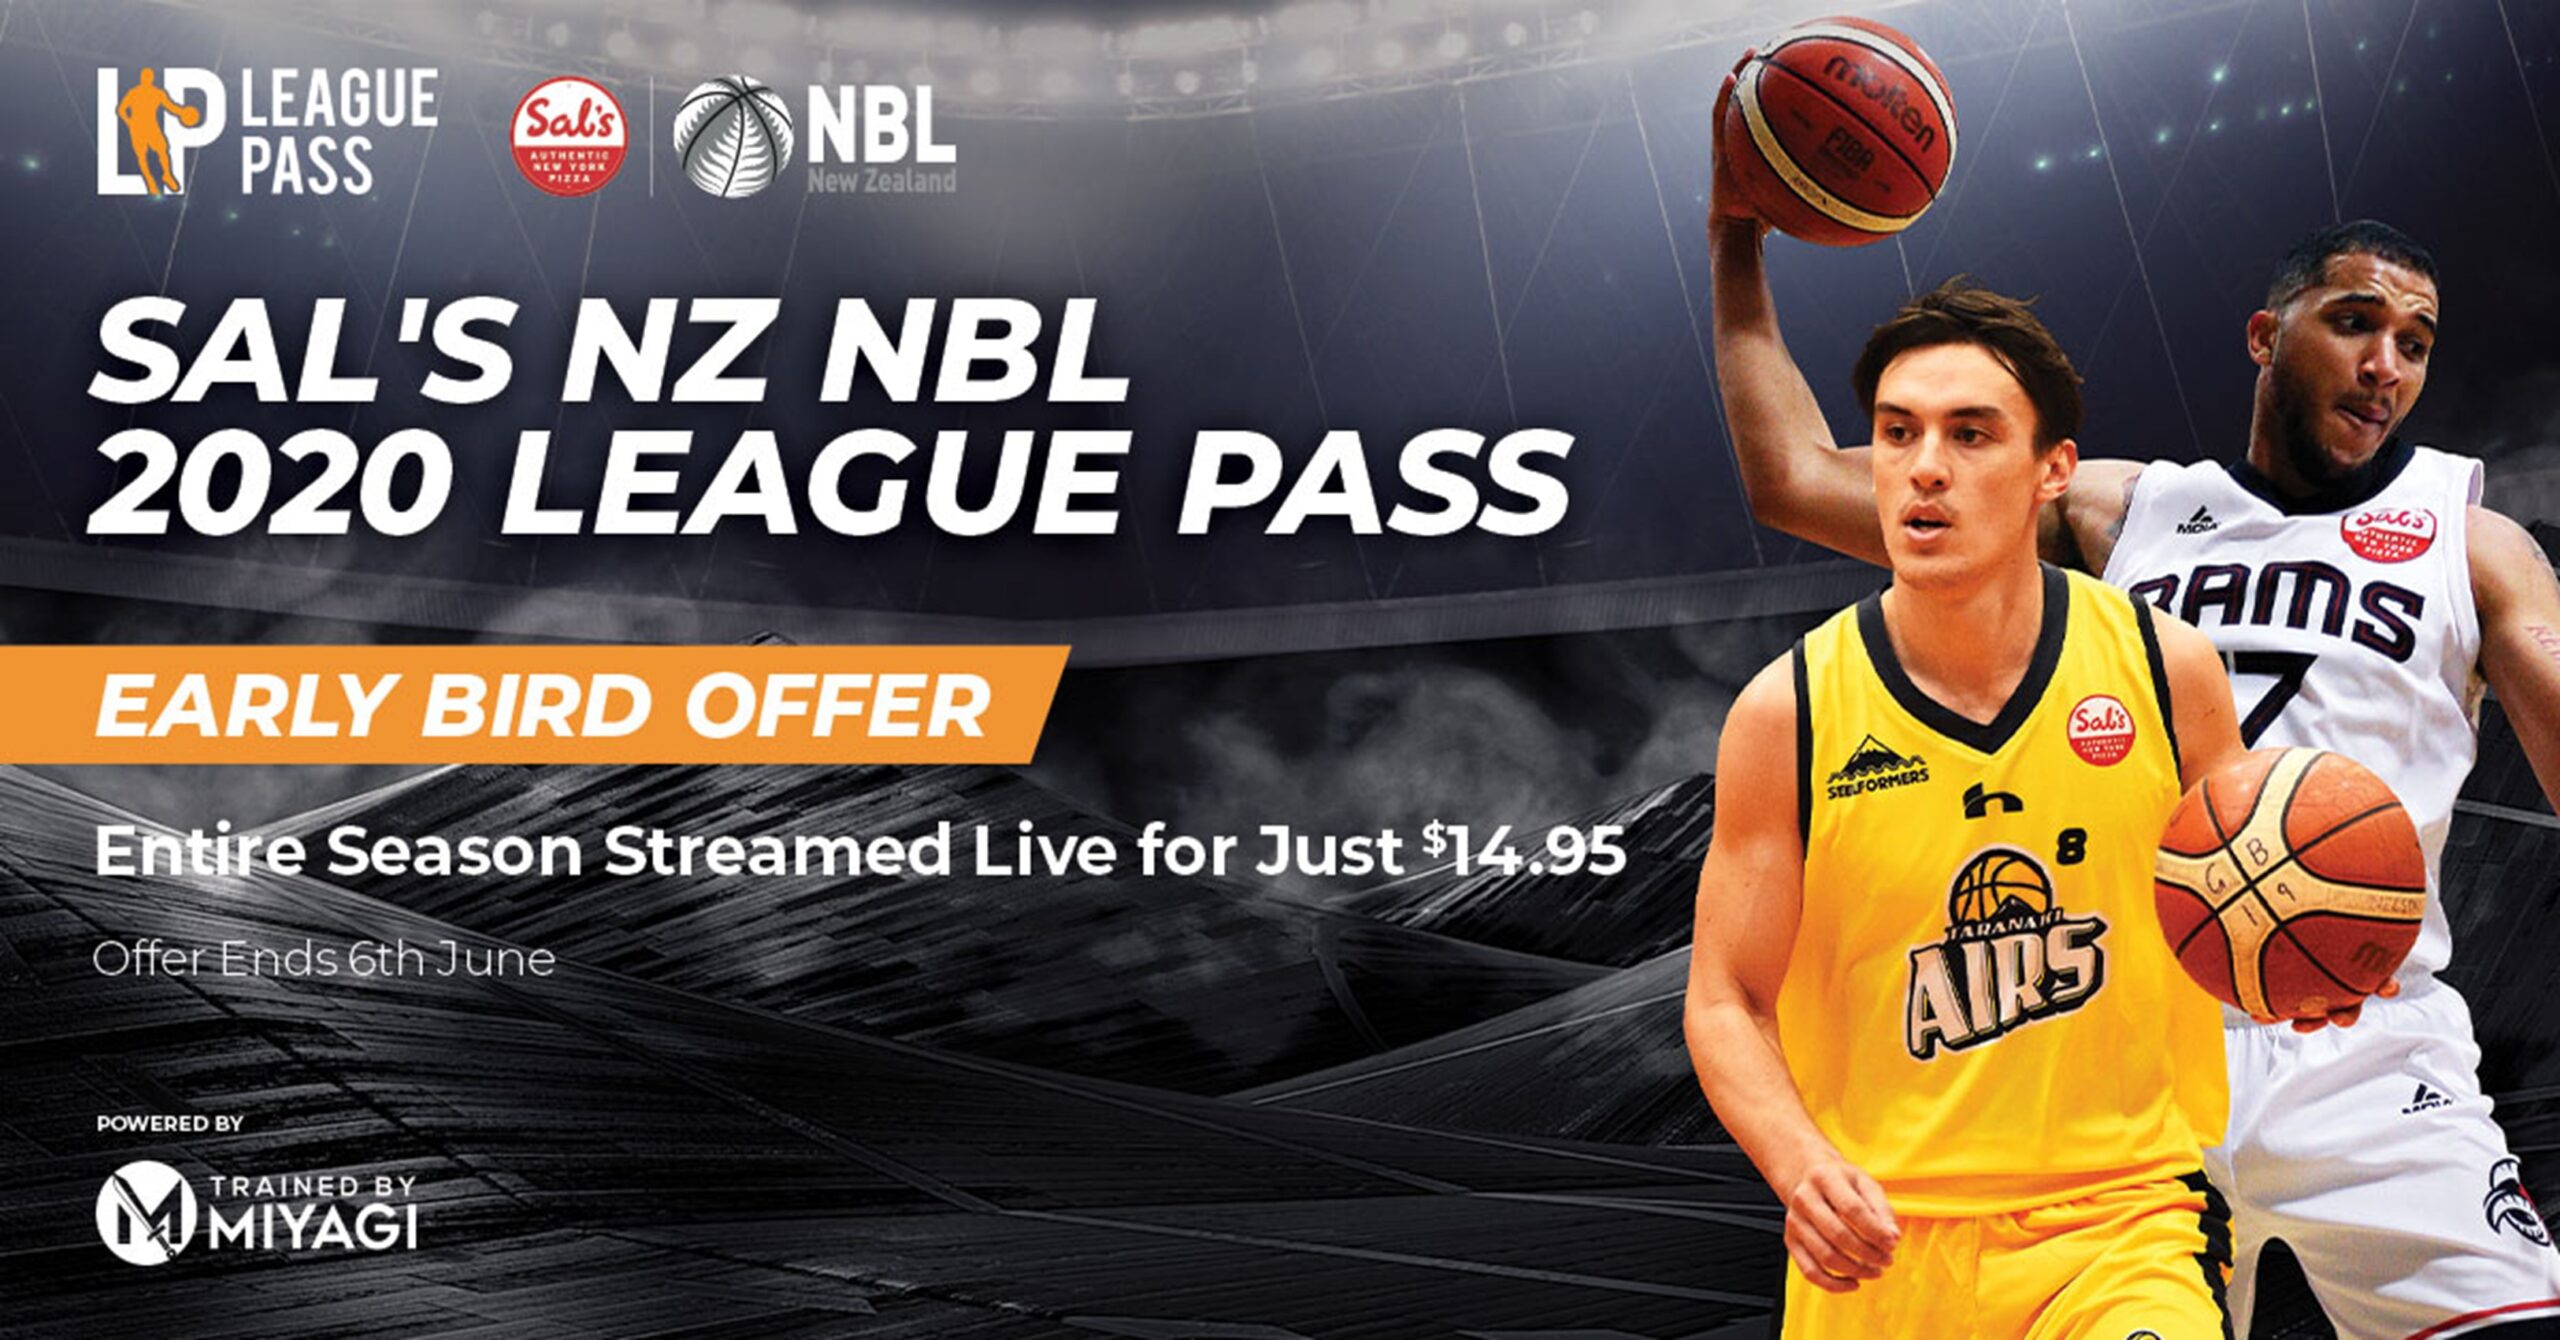 NZNBL New Zealand National Basketball League